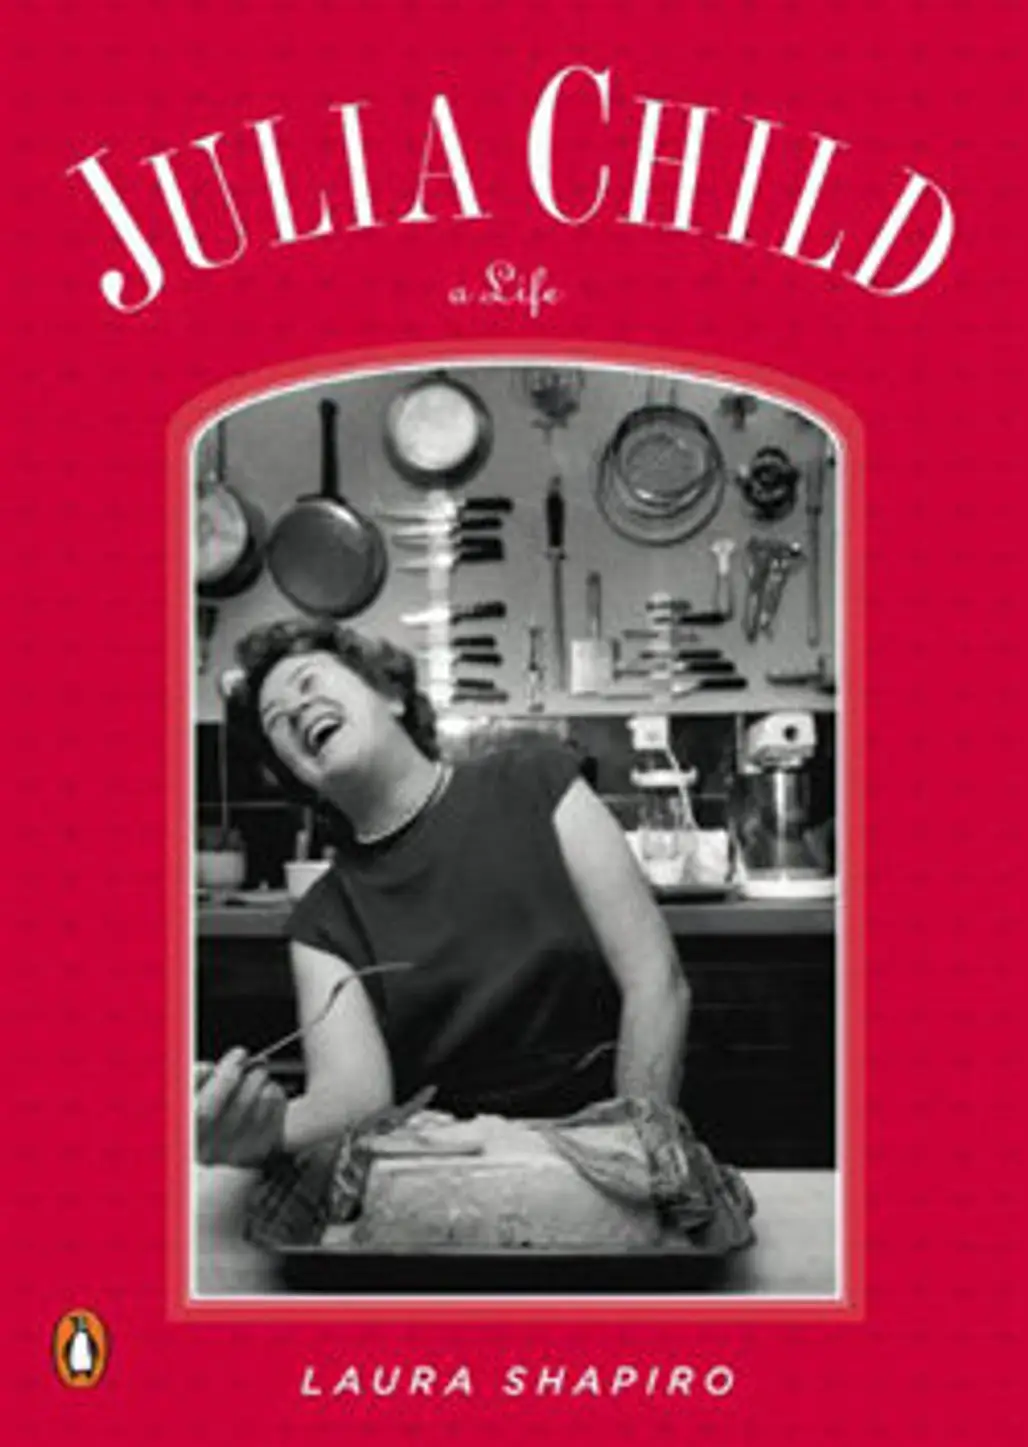 Julia Child: a Life by Laura Shapiro